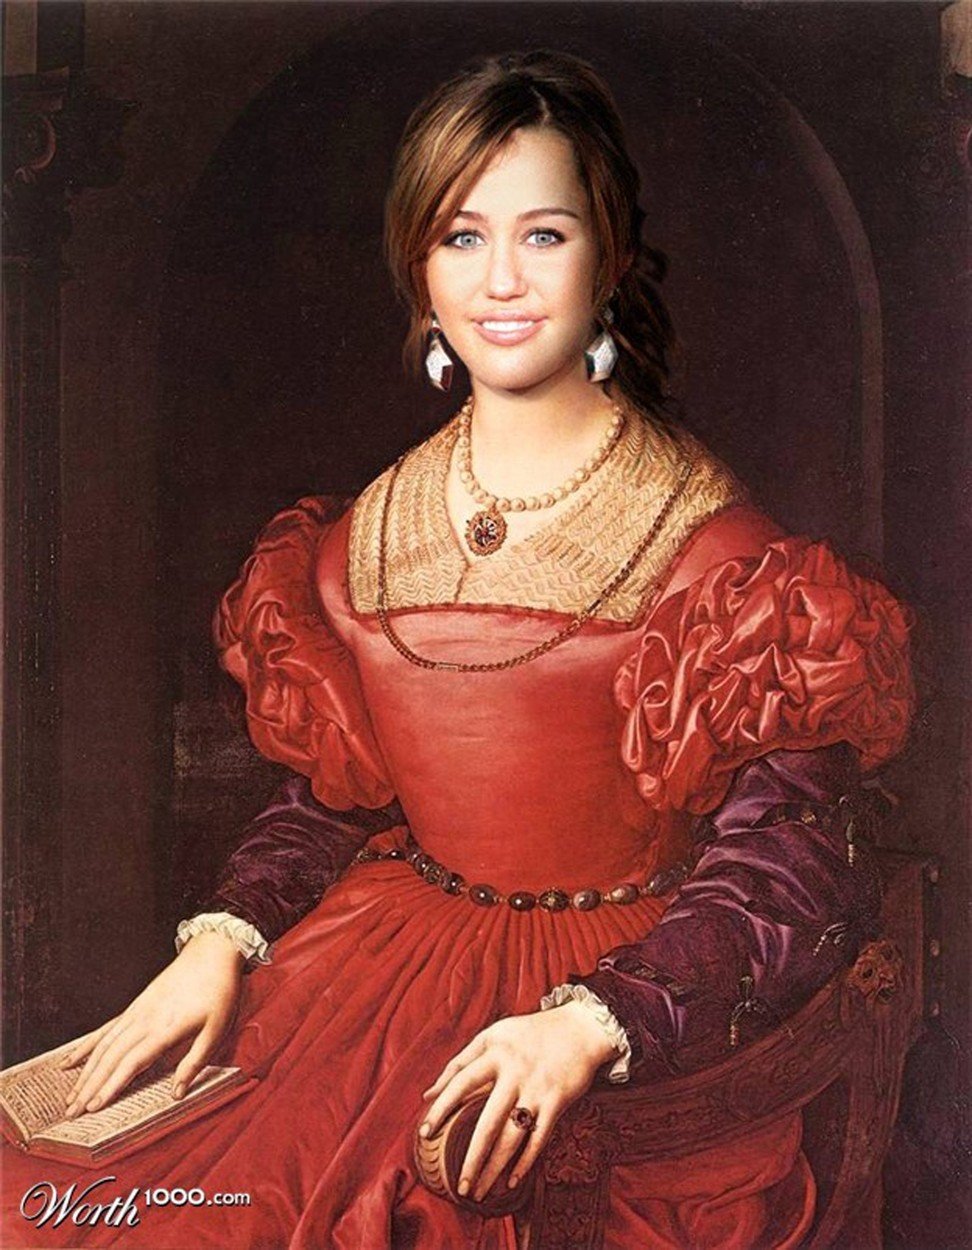 Miley Cyrus jako Alžběta Báthory